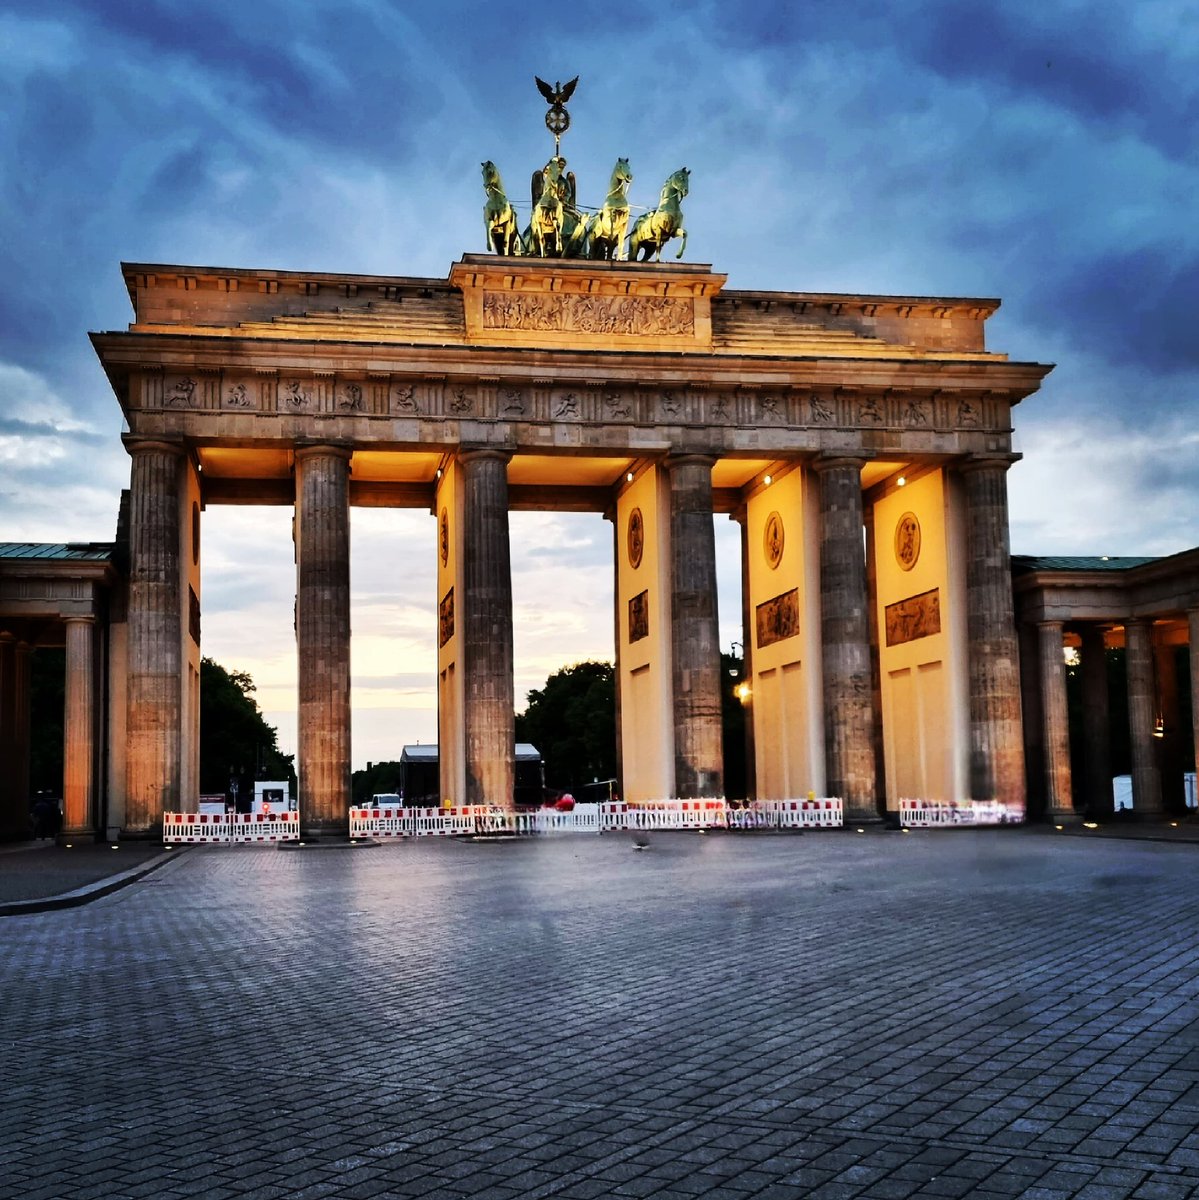 🇩🇪🇩🇪🇩🇪

#BrandenburgGate #Brandenburg #Gate #Germany #Berlin #German